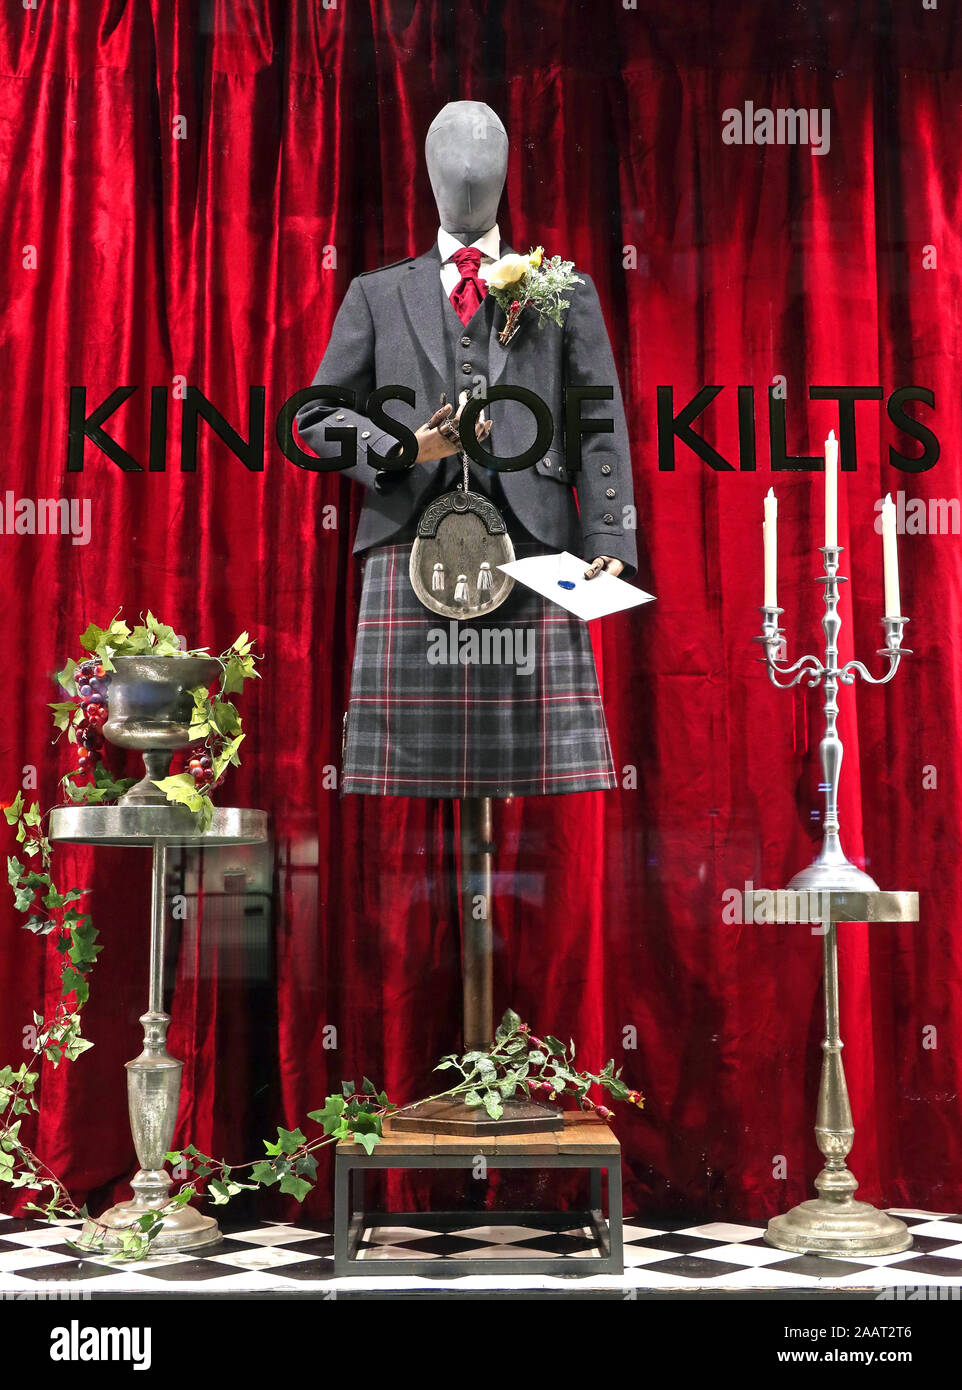 Kings of Kilts shop, 39 - 41 Bath Street, Glasgow, Scotland, UK G2 1HW, Kilt Store, MacGregor e MacDuff - abbigliamento delle Highland Foto Stock